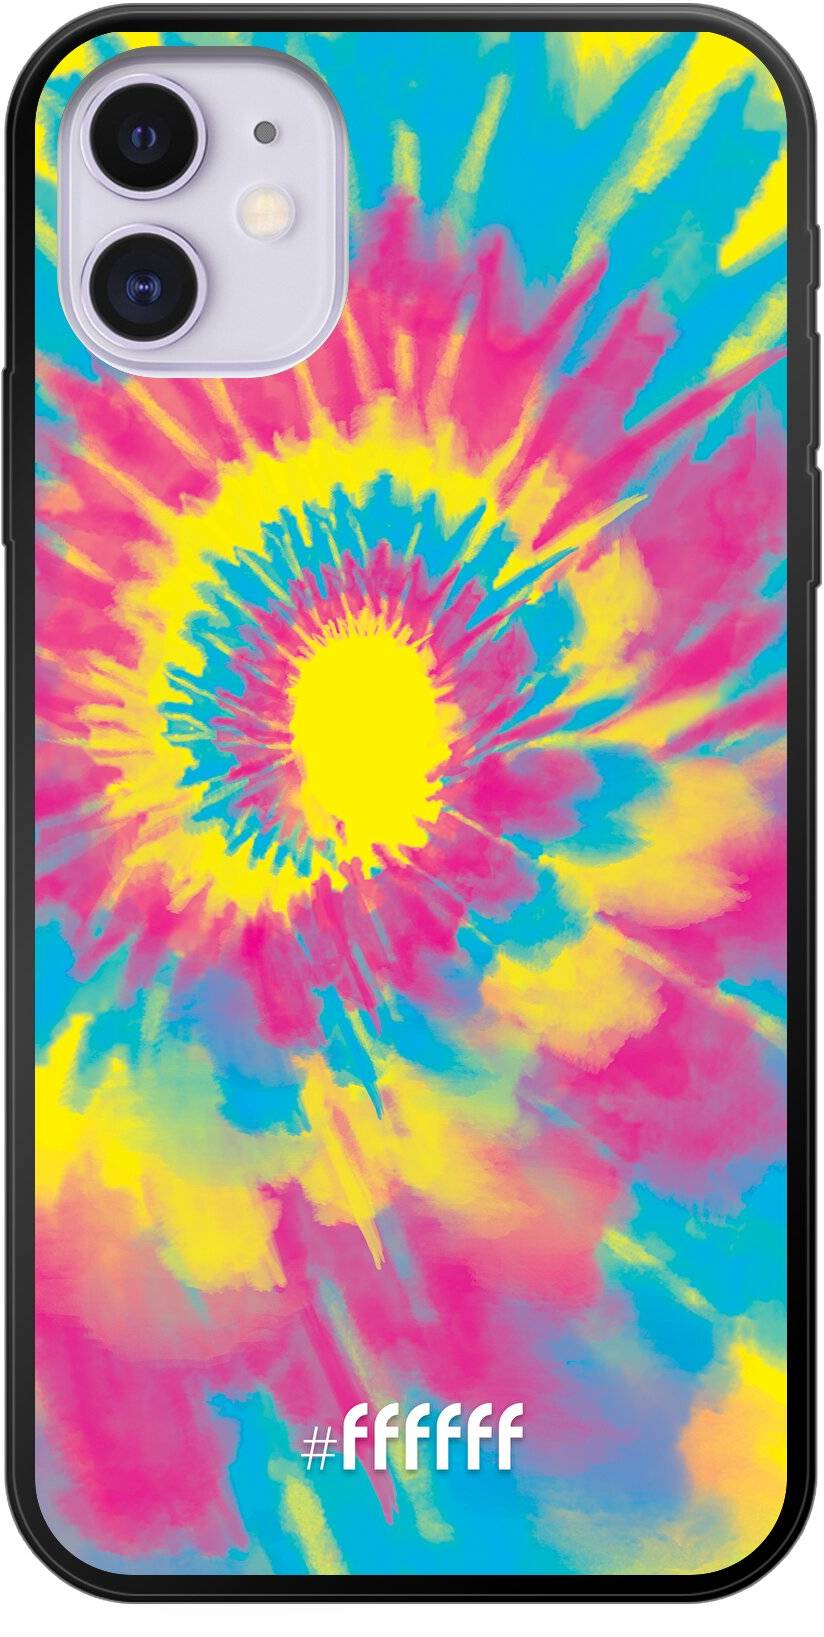 Psychedelic Tie Dye iPhone 11